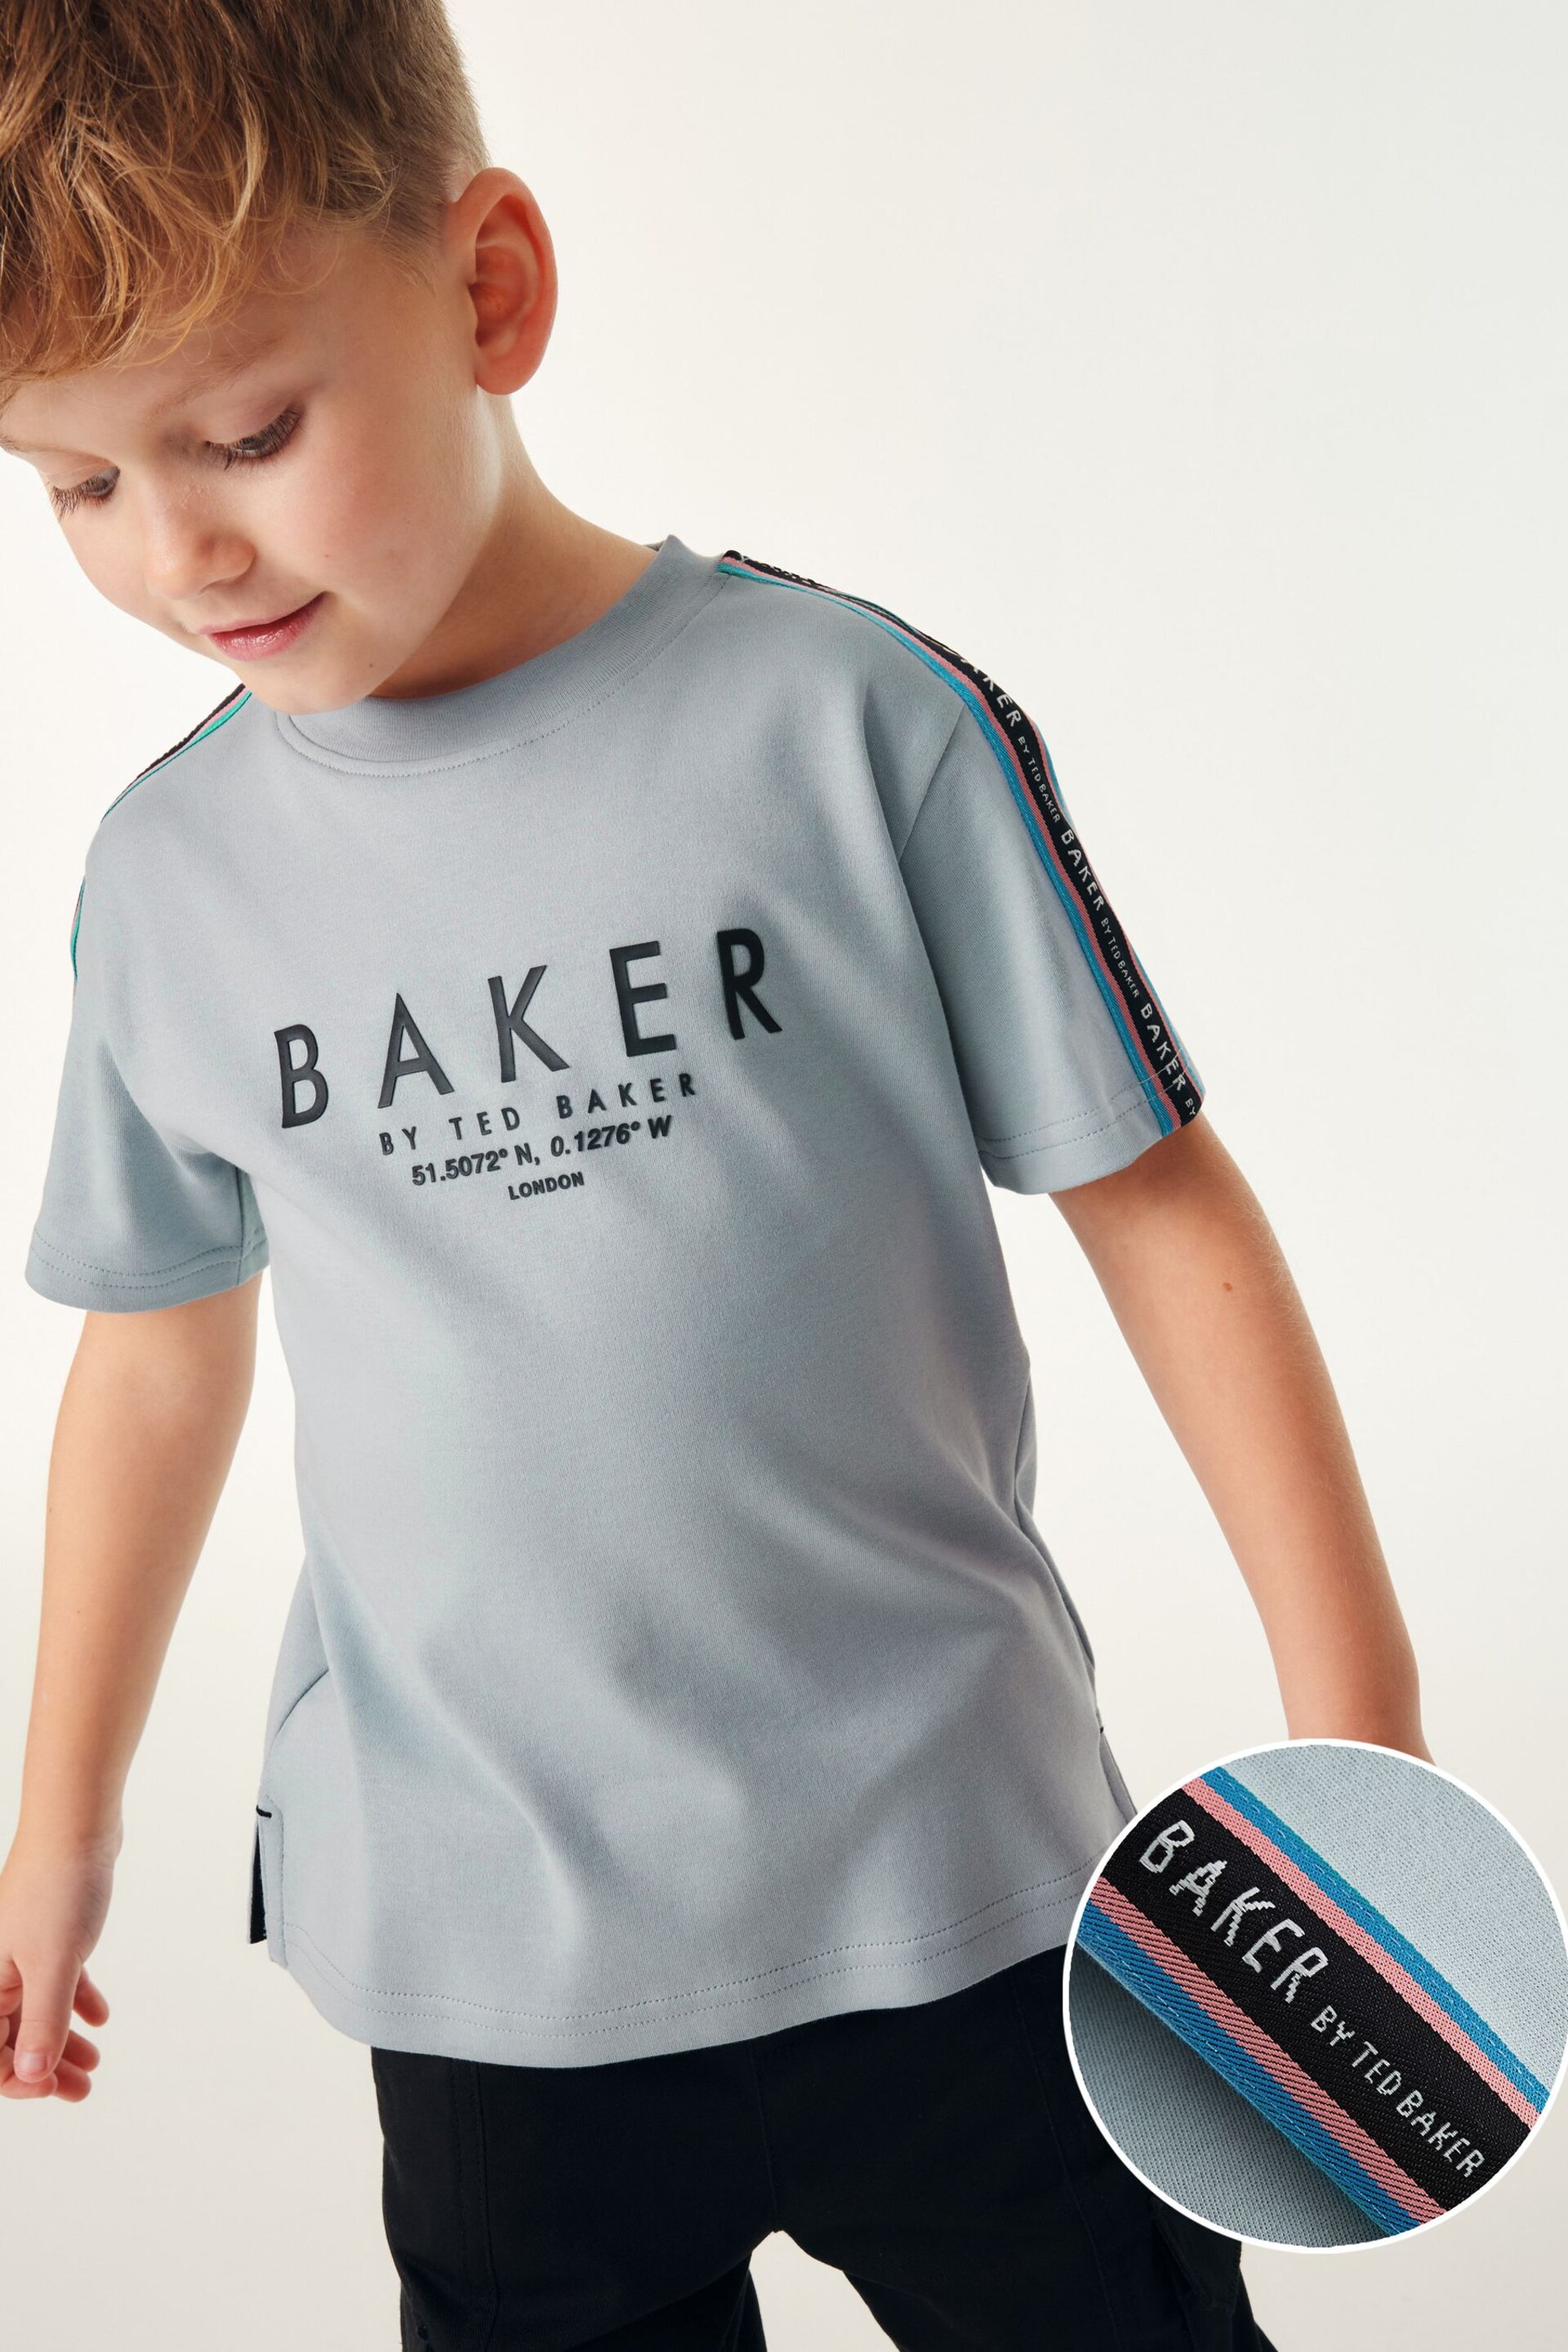 Baker by Ted Baker Blue Tape Detail T-Shirt - Image 1 of 12